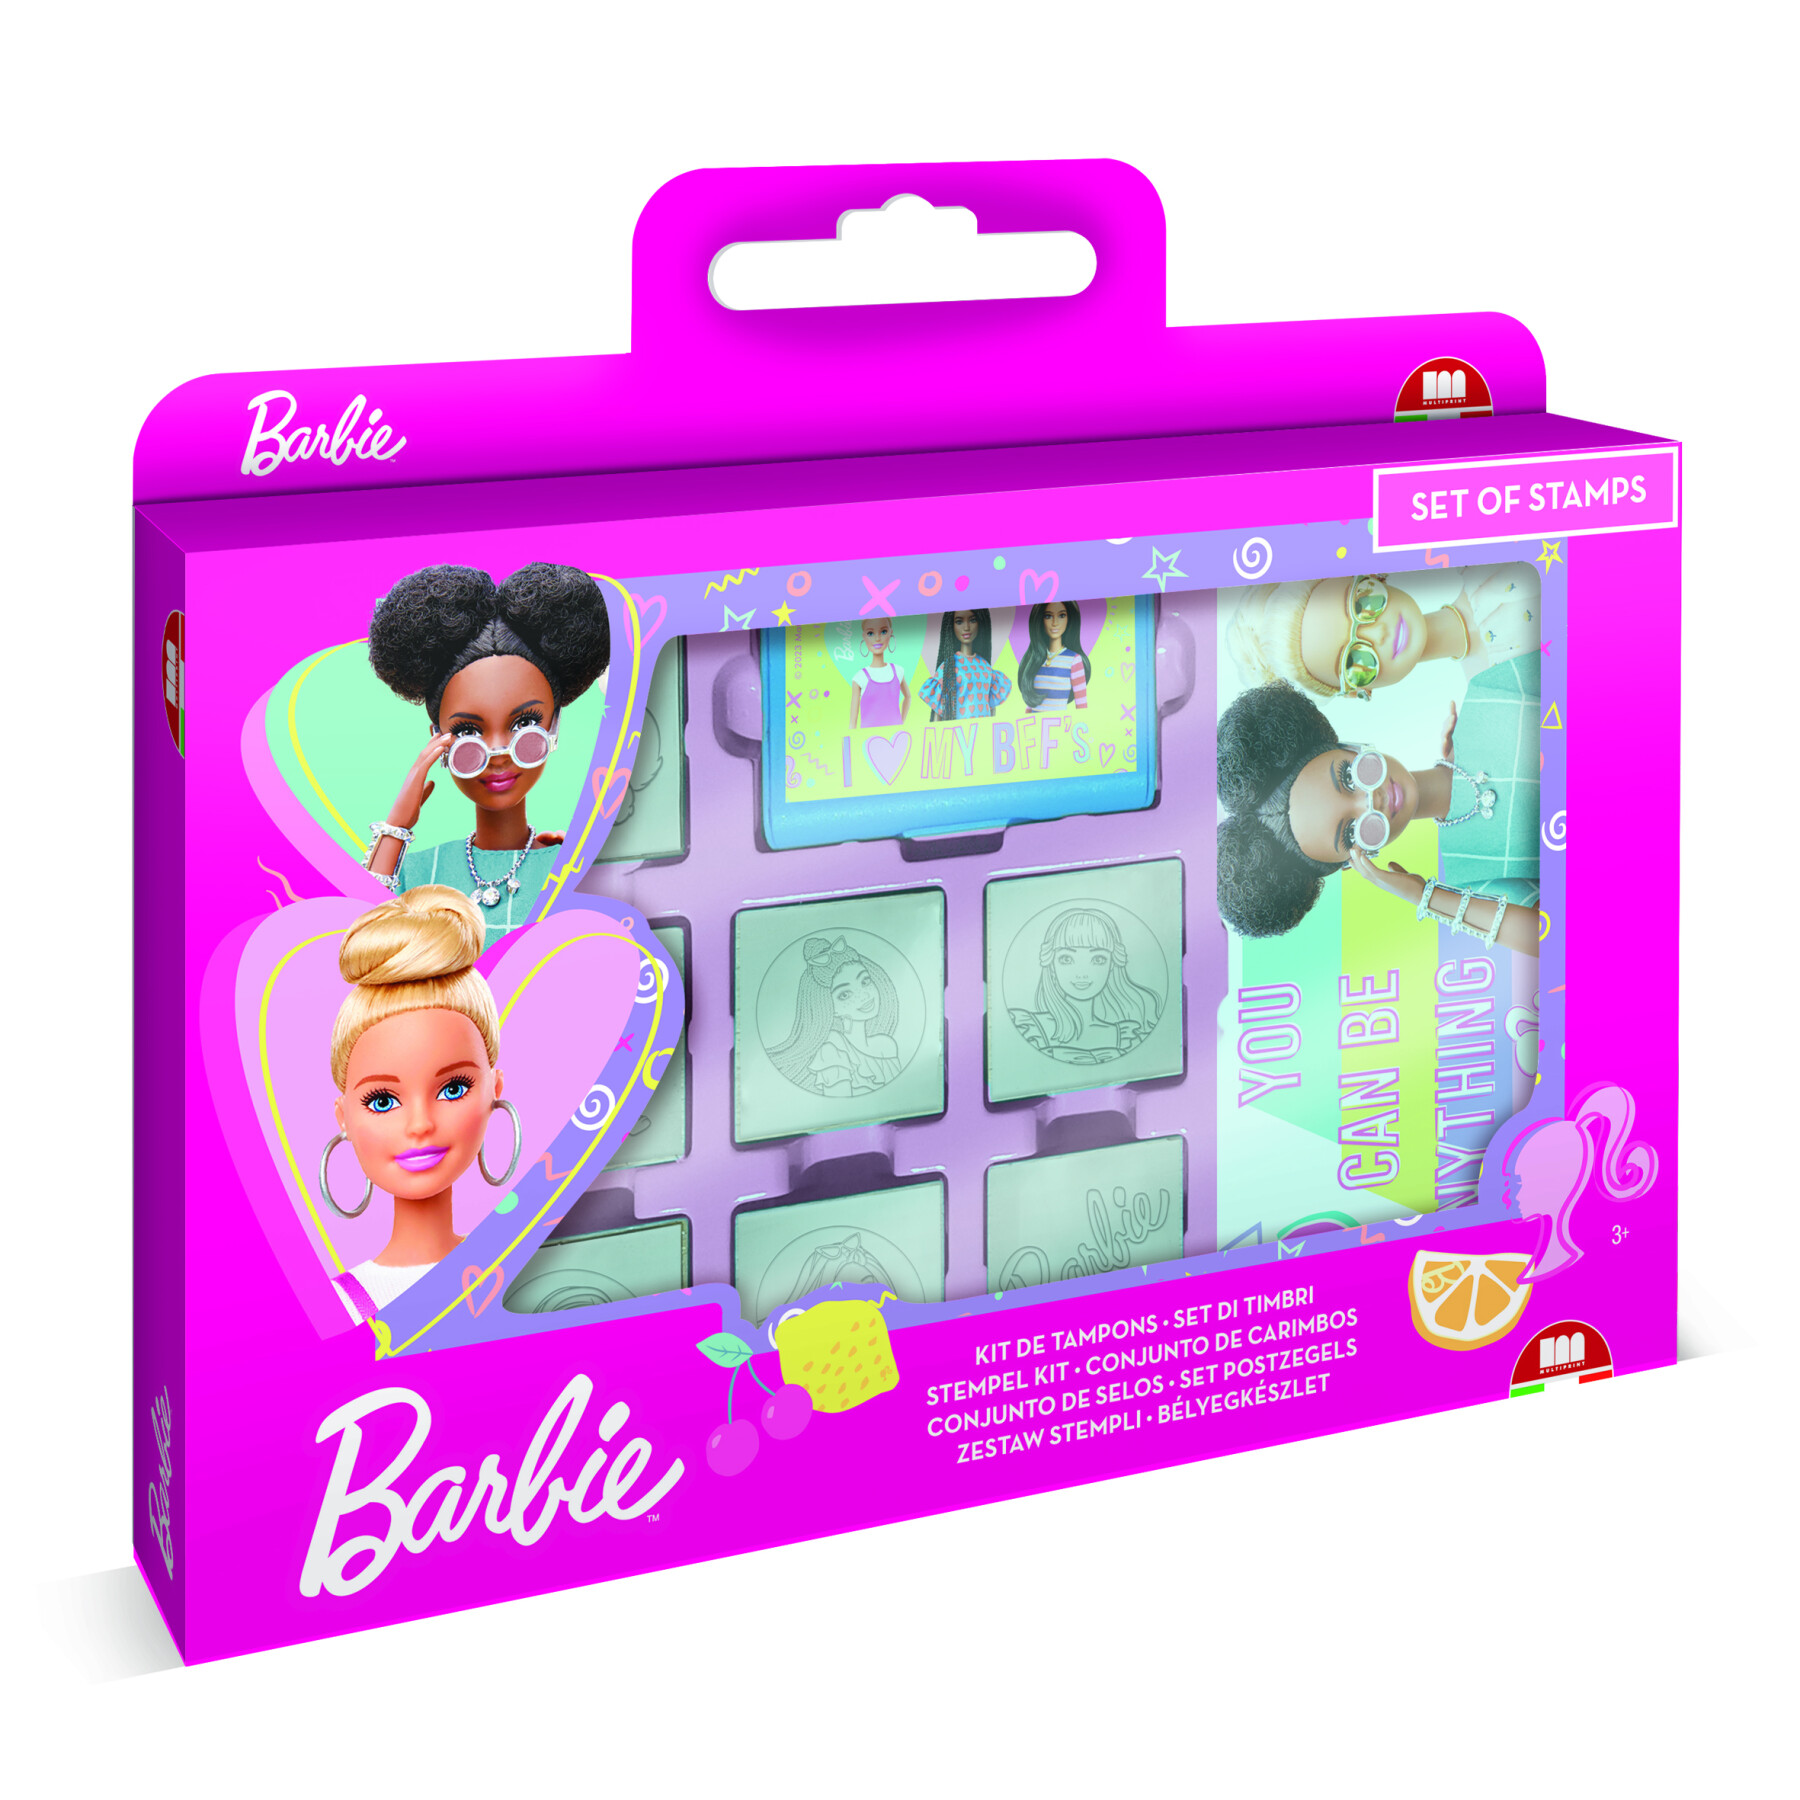 Multiprint - valigetta 7 timbri barbie per bambini made in italy - Barbie